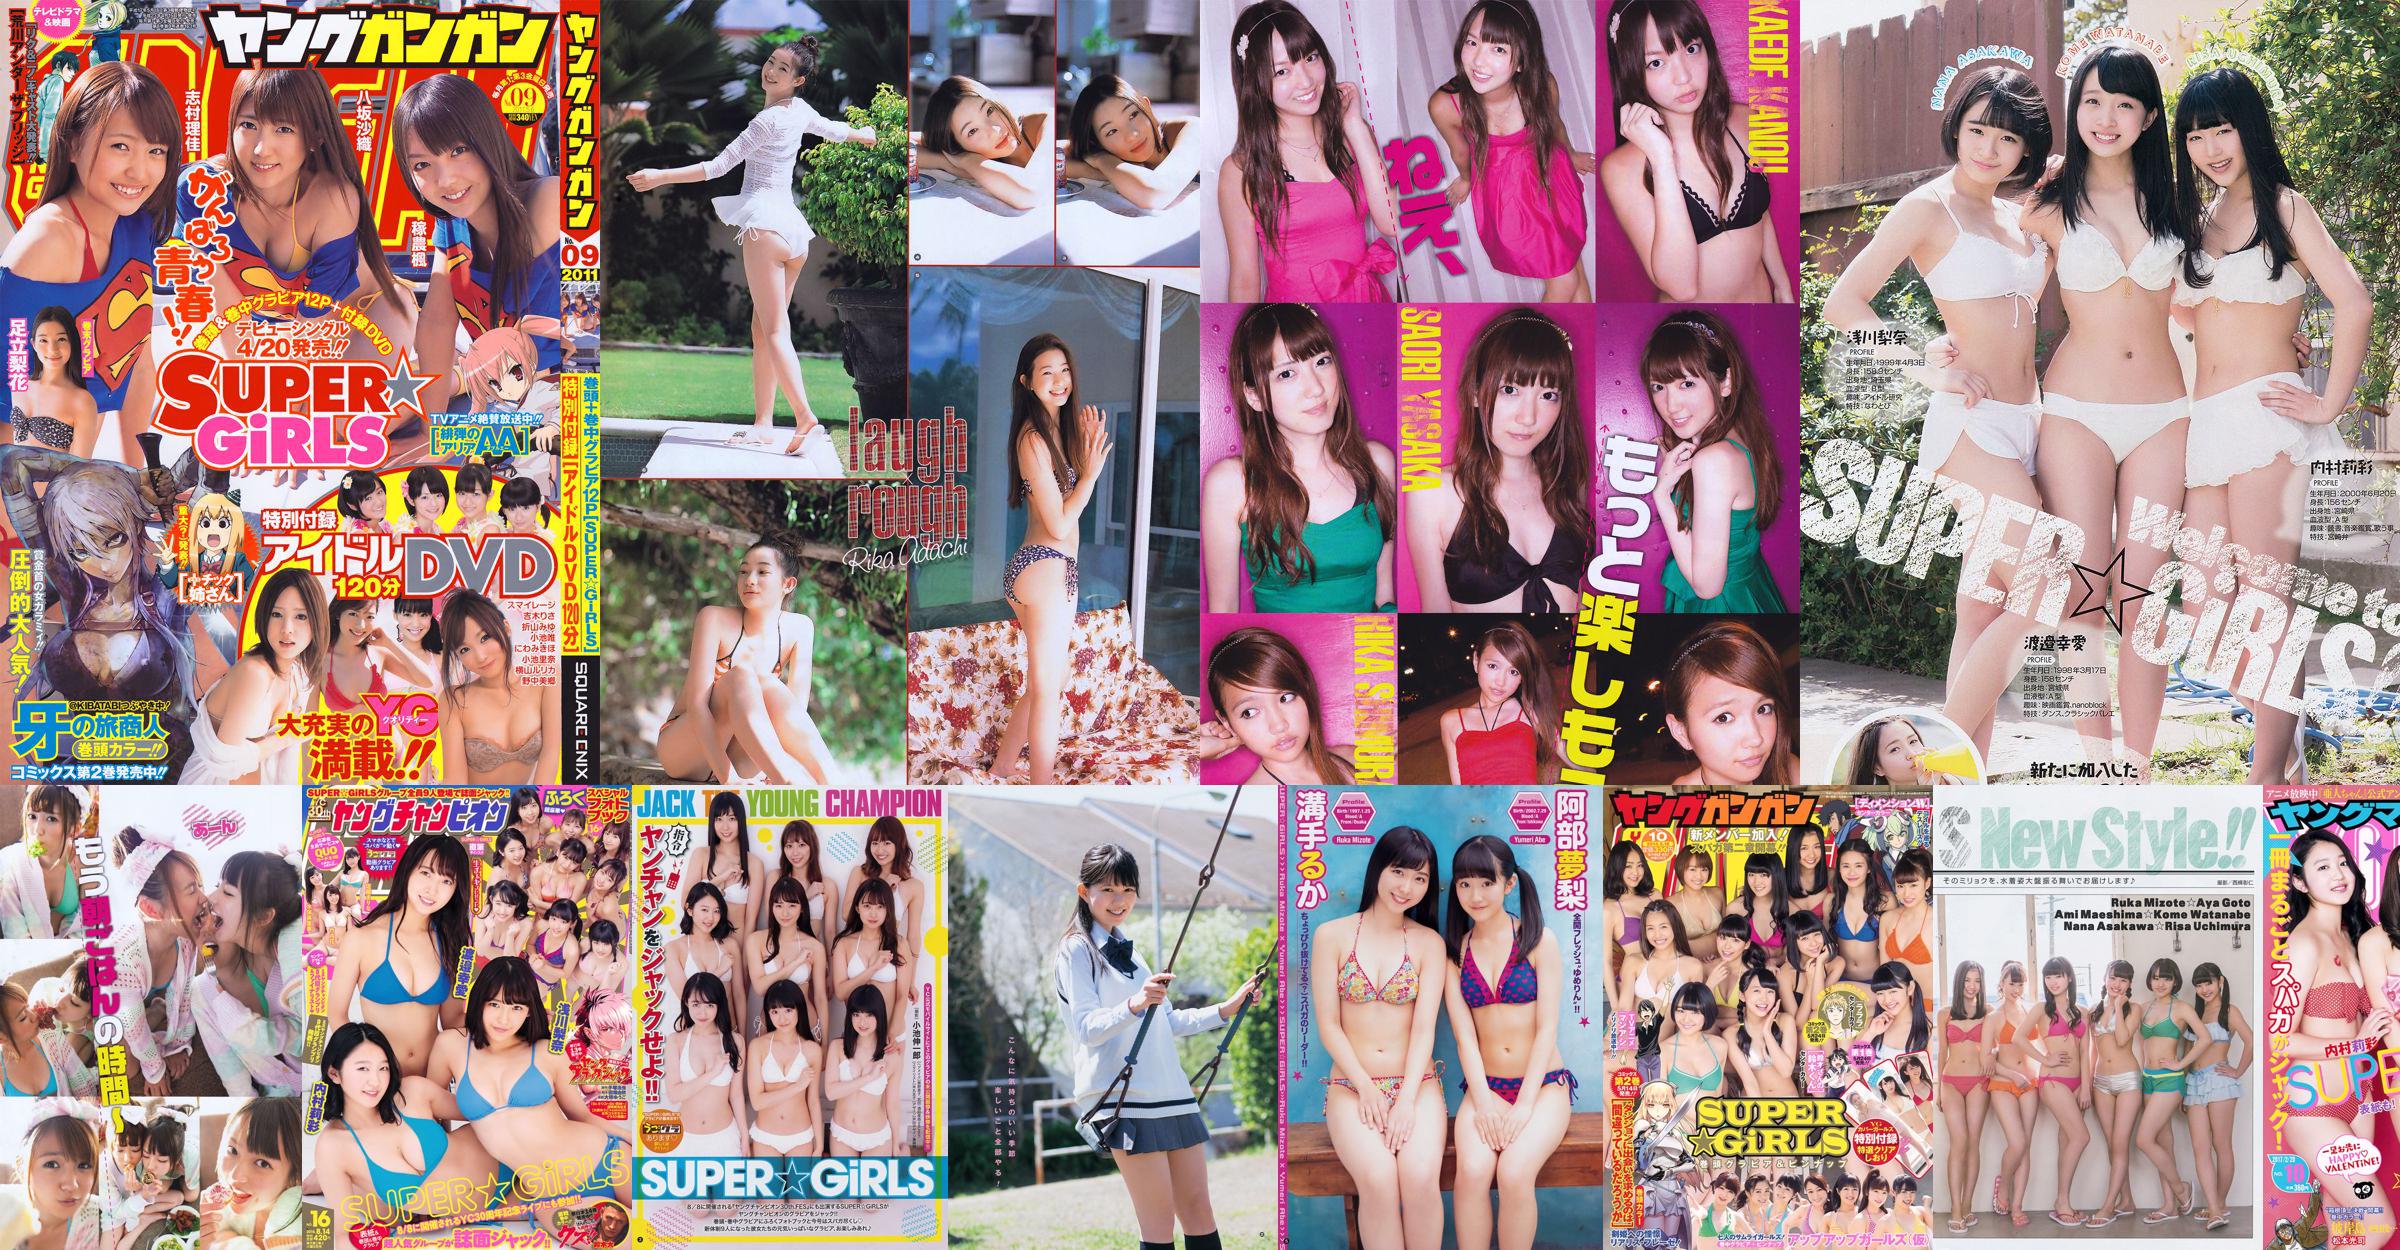 [Young Gangan] SUPER ☆ GiRLS Up Up Girls (Kakko) Ami Yokoyama 2014 No.10 Fotografía No.a312dd Página 1